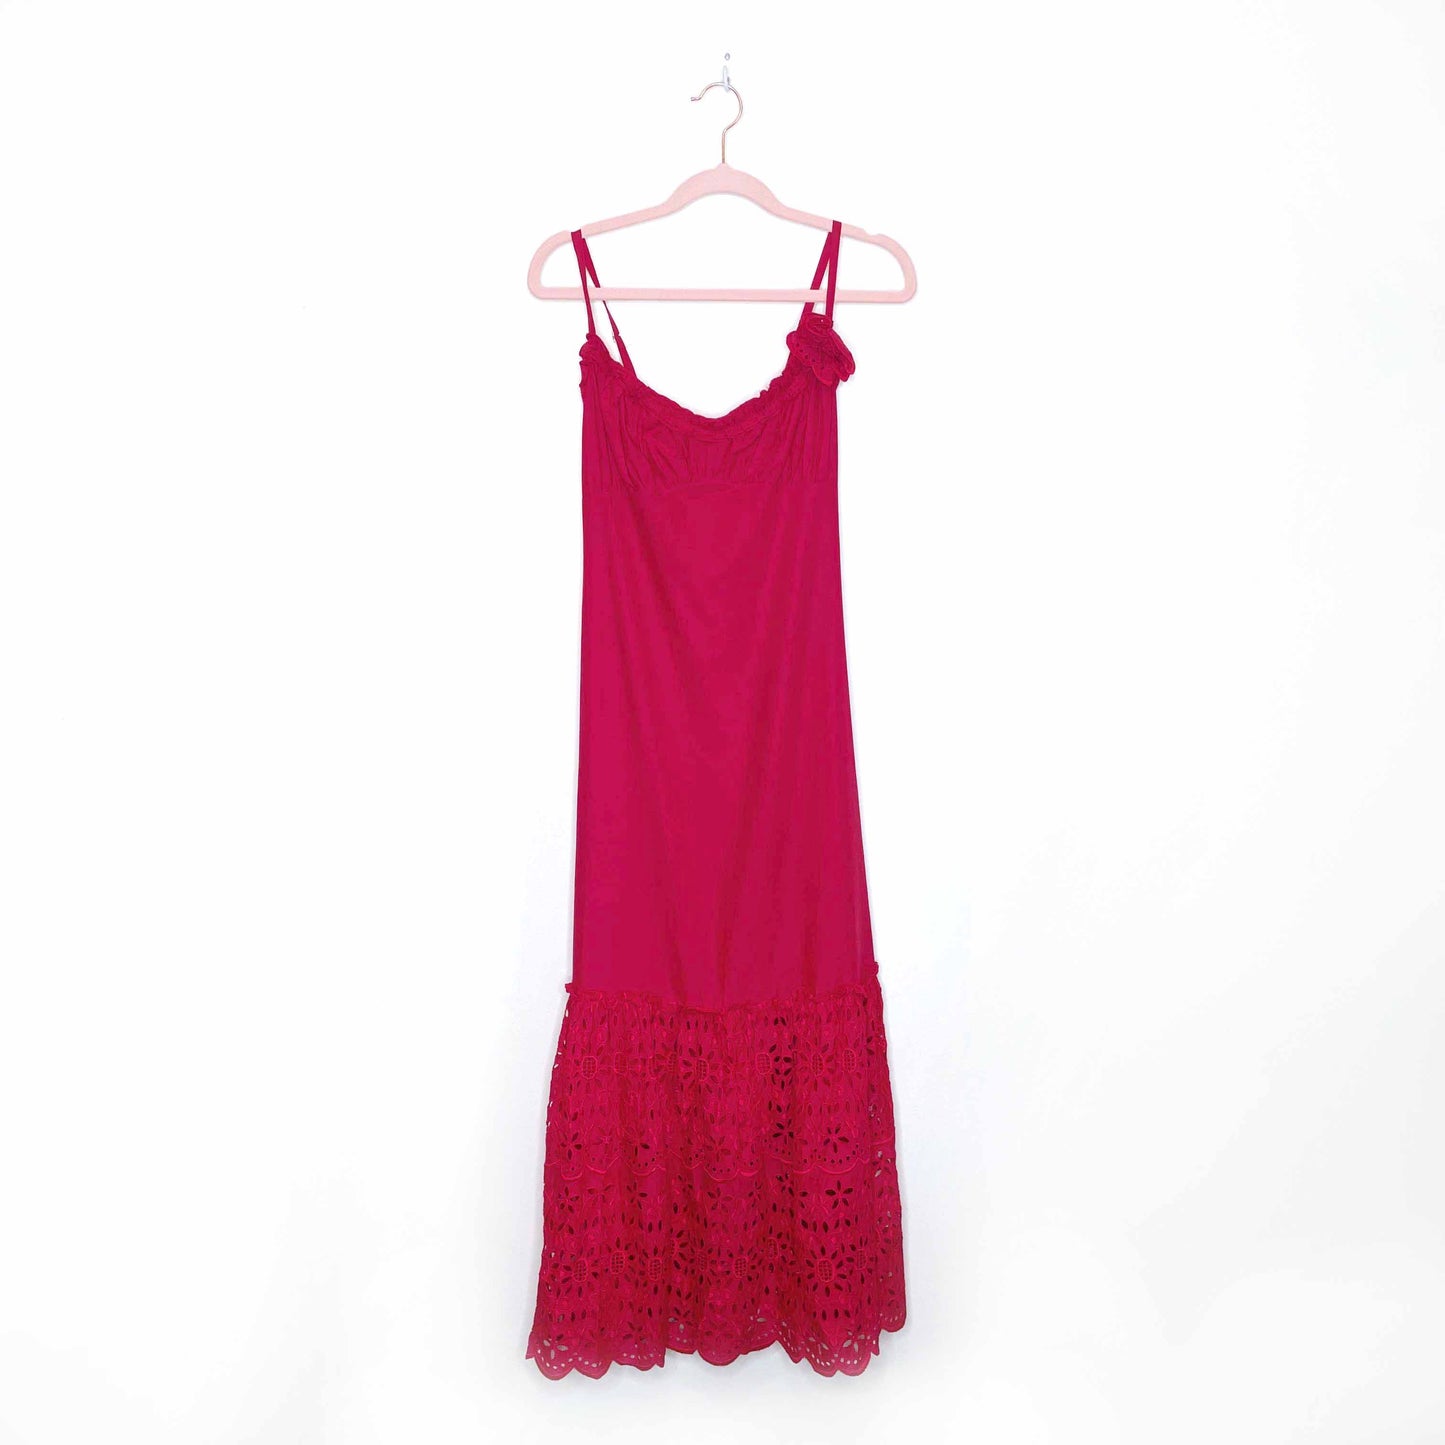 nwt kfg italy red midi dress with lace hem - size 42